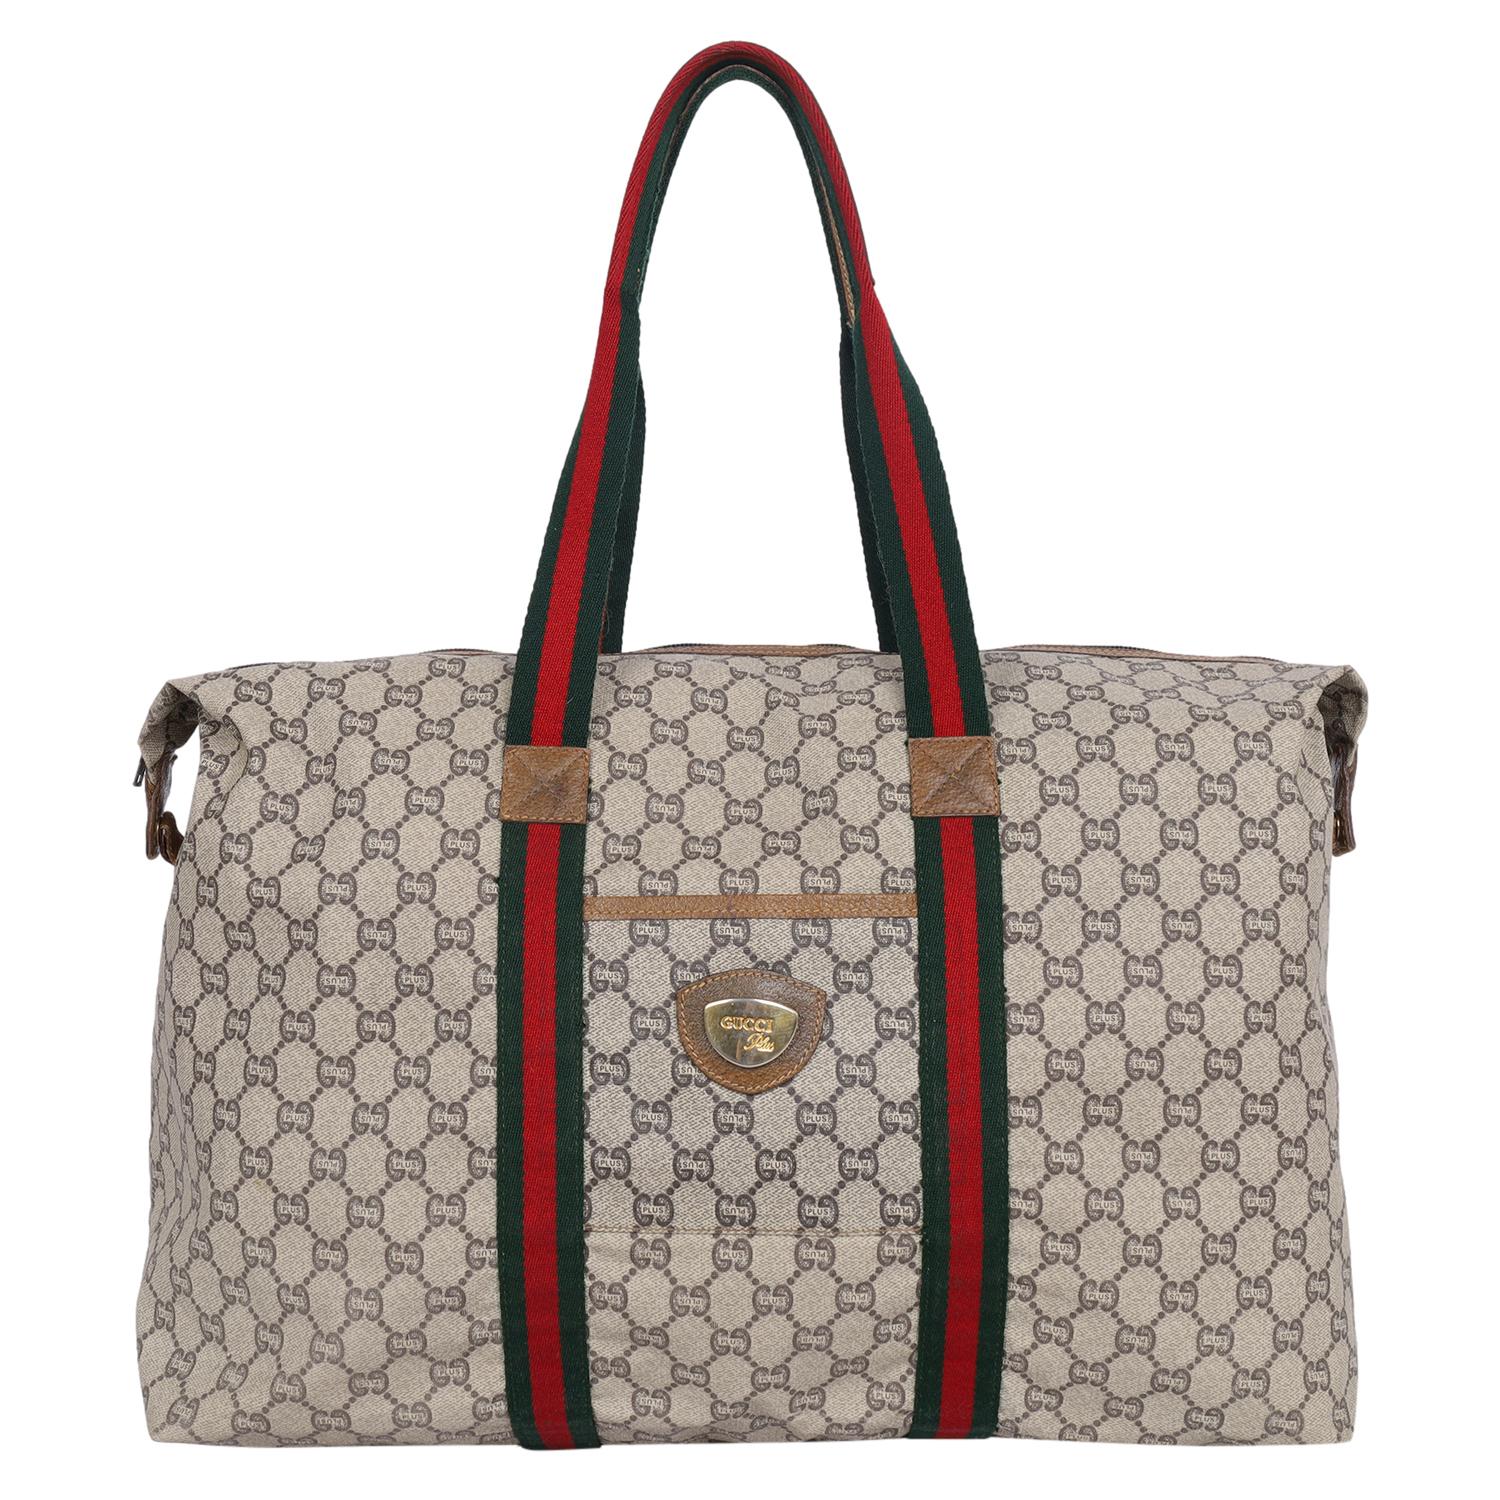 Gray Gucci GG Monogram Canvas Shoulder Bag Tote